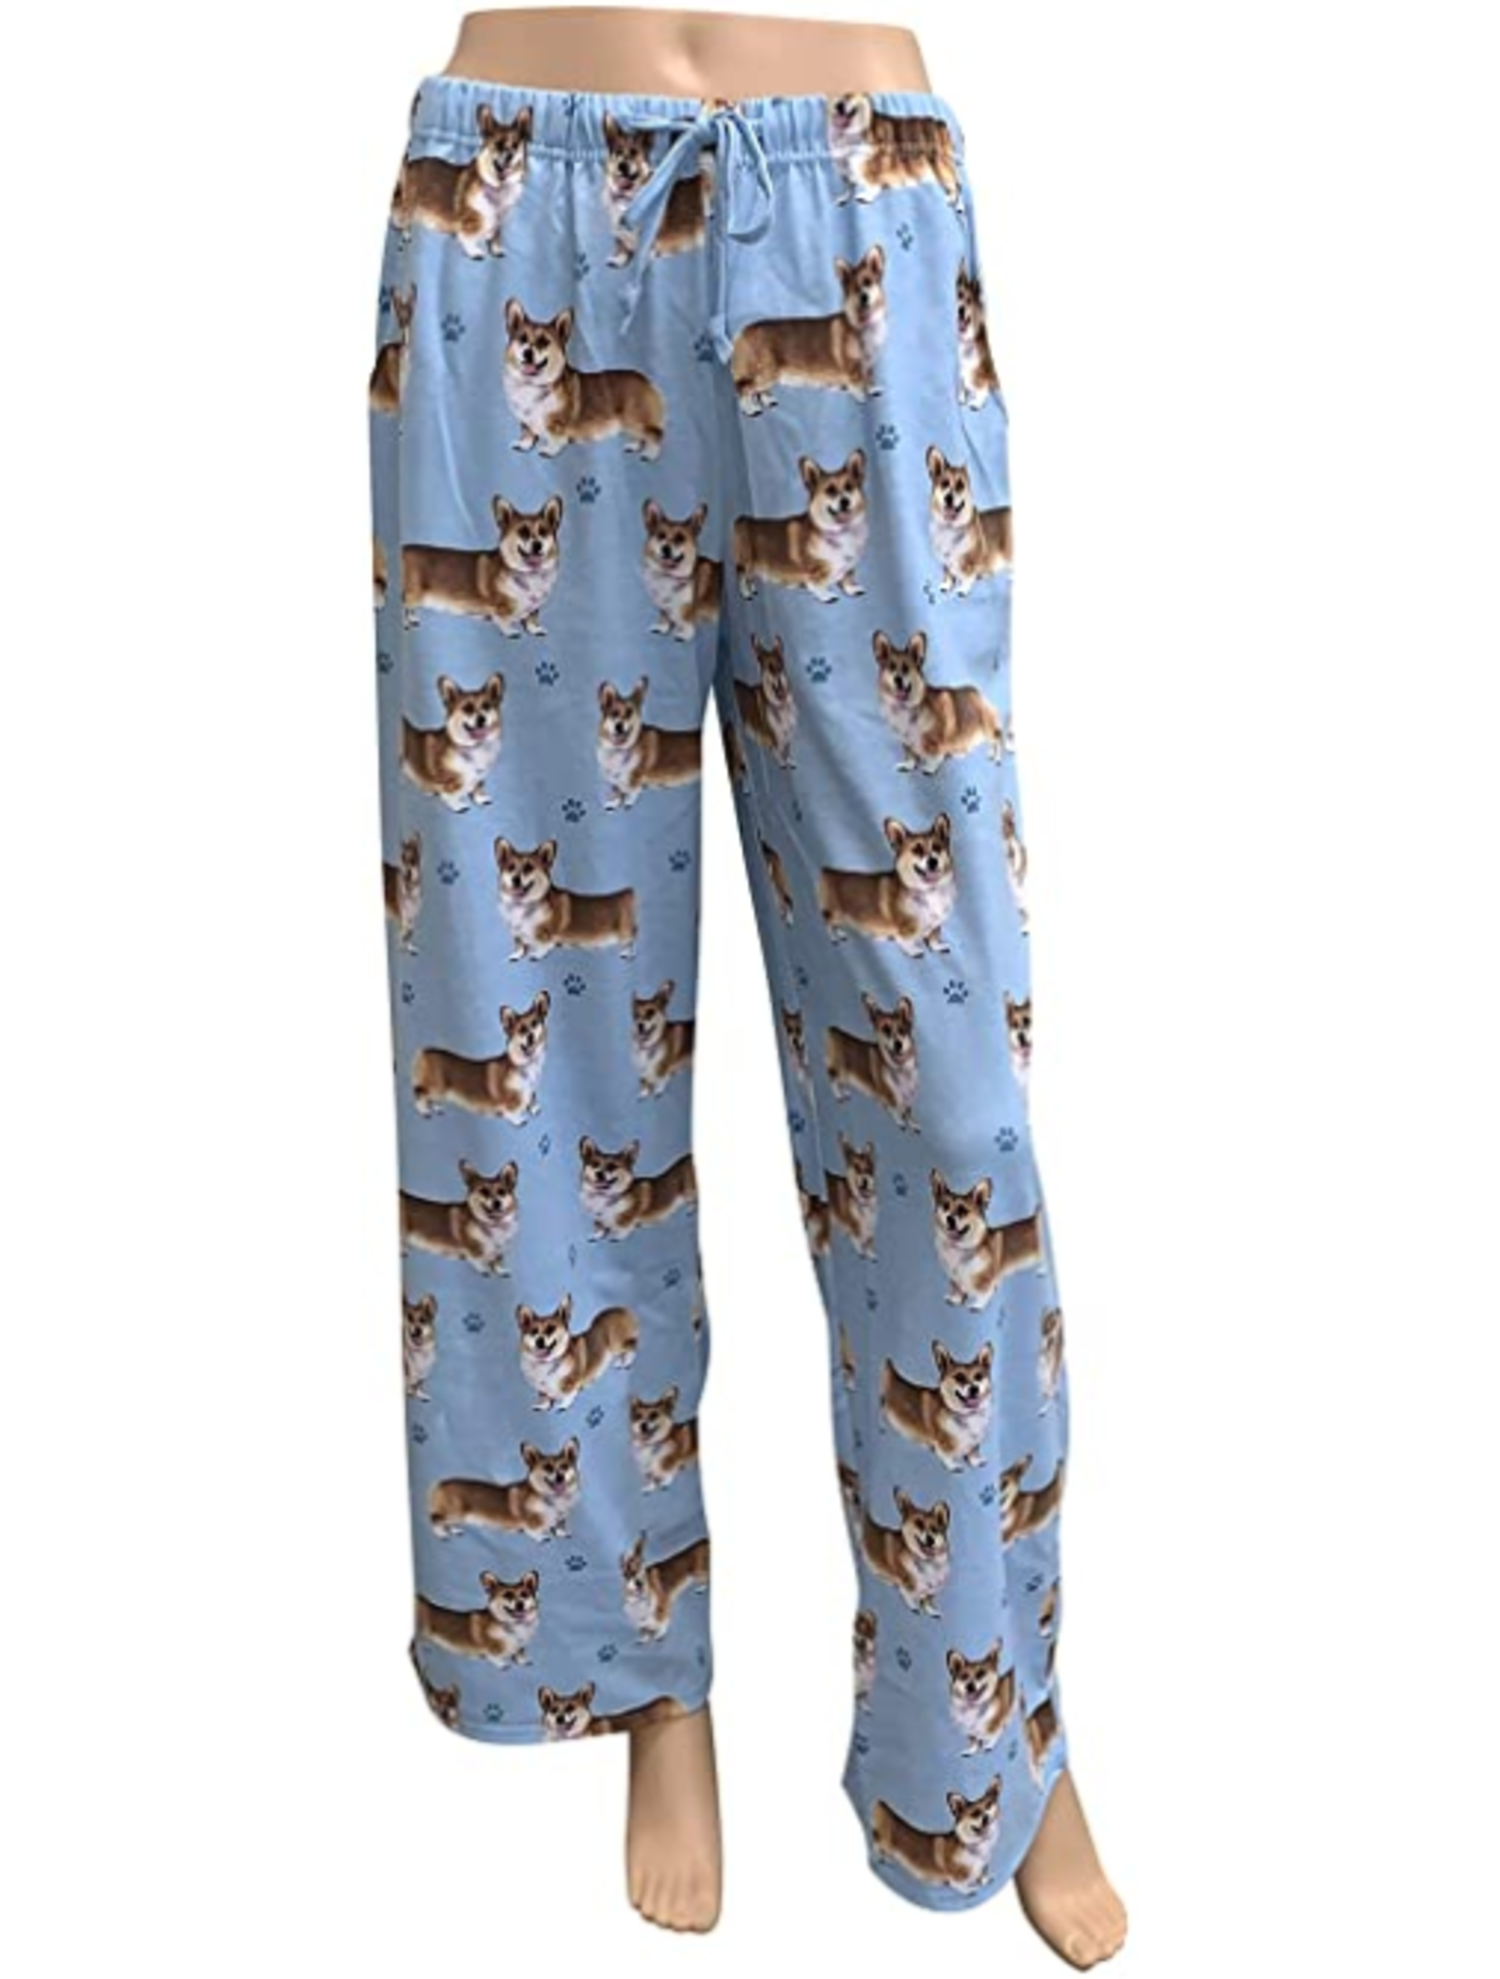  E & S Imports Womens Corgi Dog Lounge Pants - Pajama